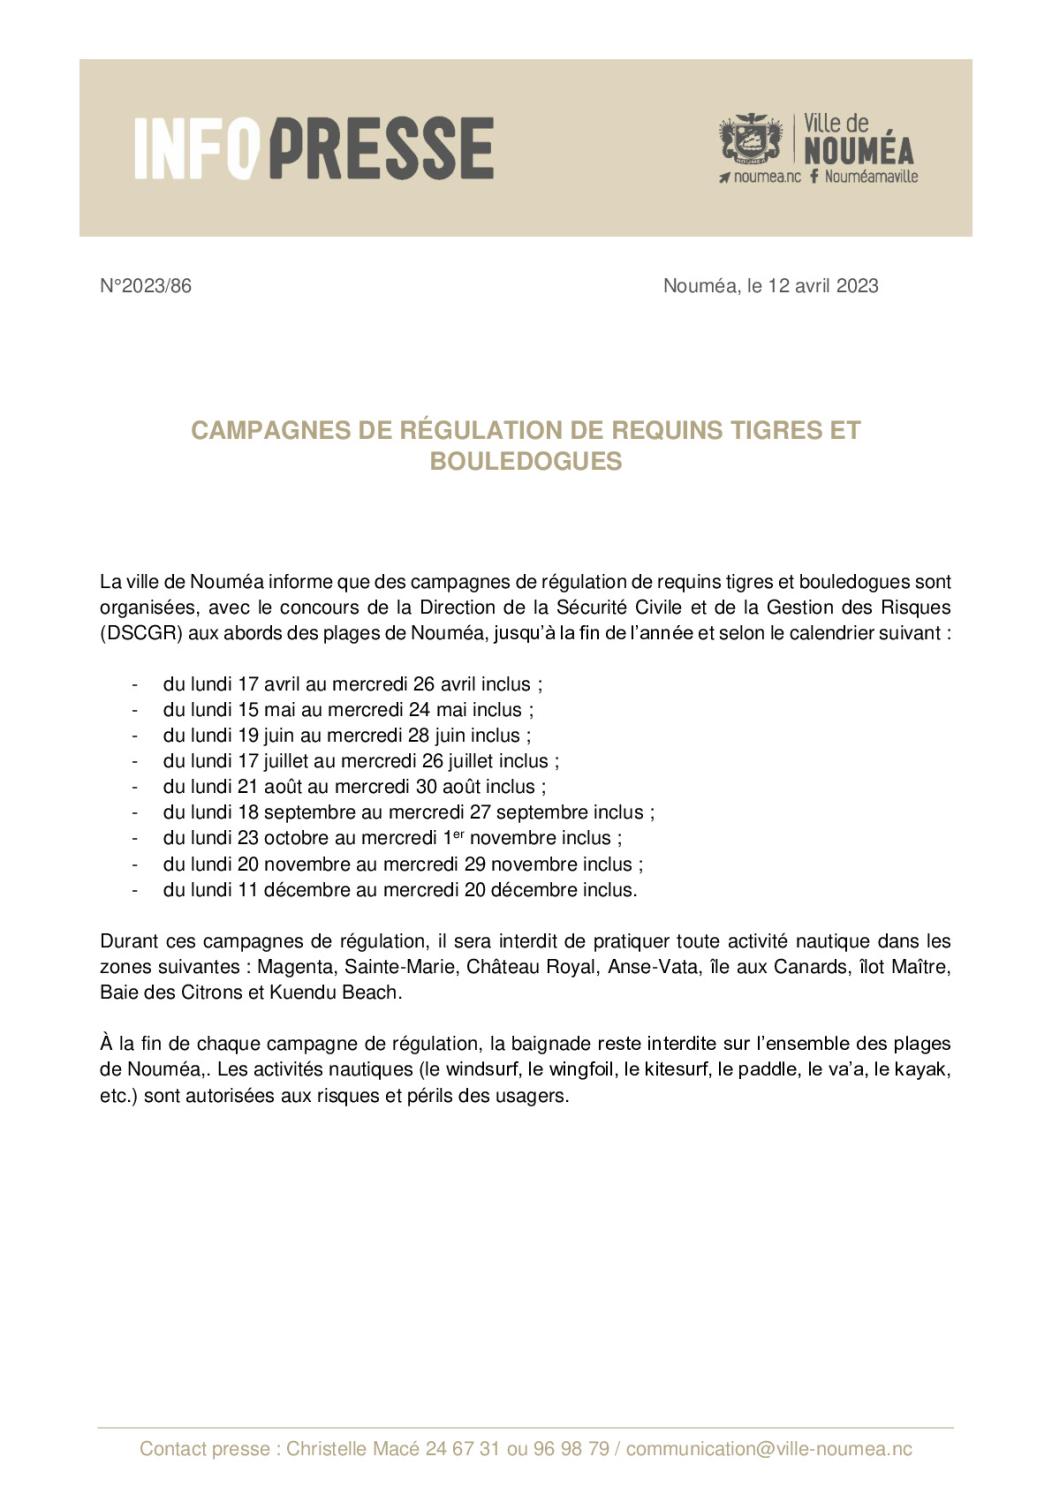 IP 86 Campagnes de régulation requins tigres et bouledogues.pdf